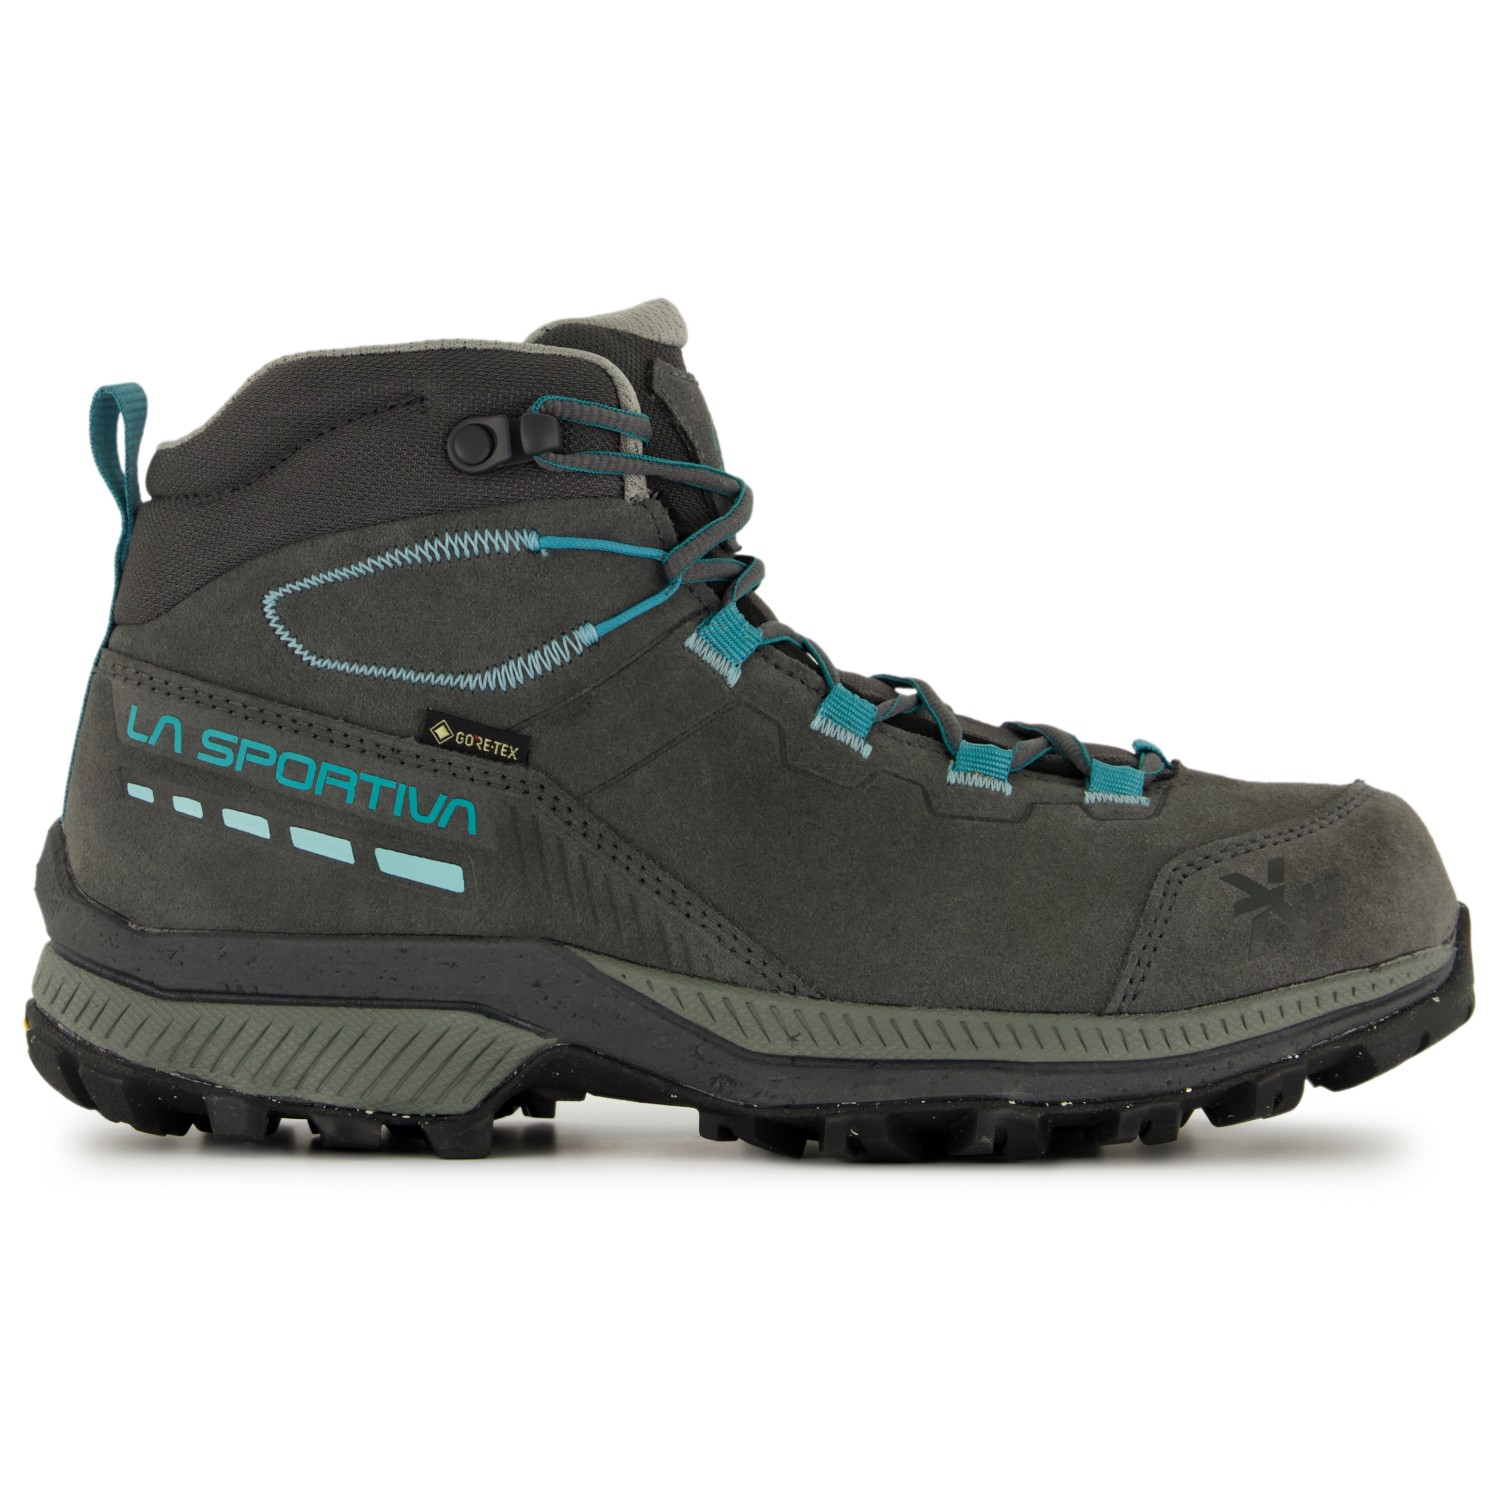 Ботинки для прогулки La Sportiva Women's TX Hike Mid Leather GTX, цвет Carbon/Lagoon обувь tx canyon мужская la sportiva черный желтый